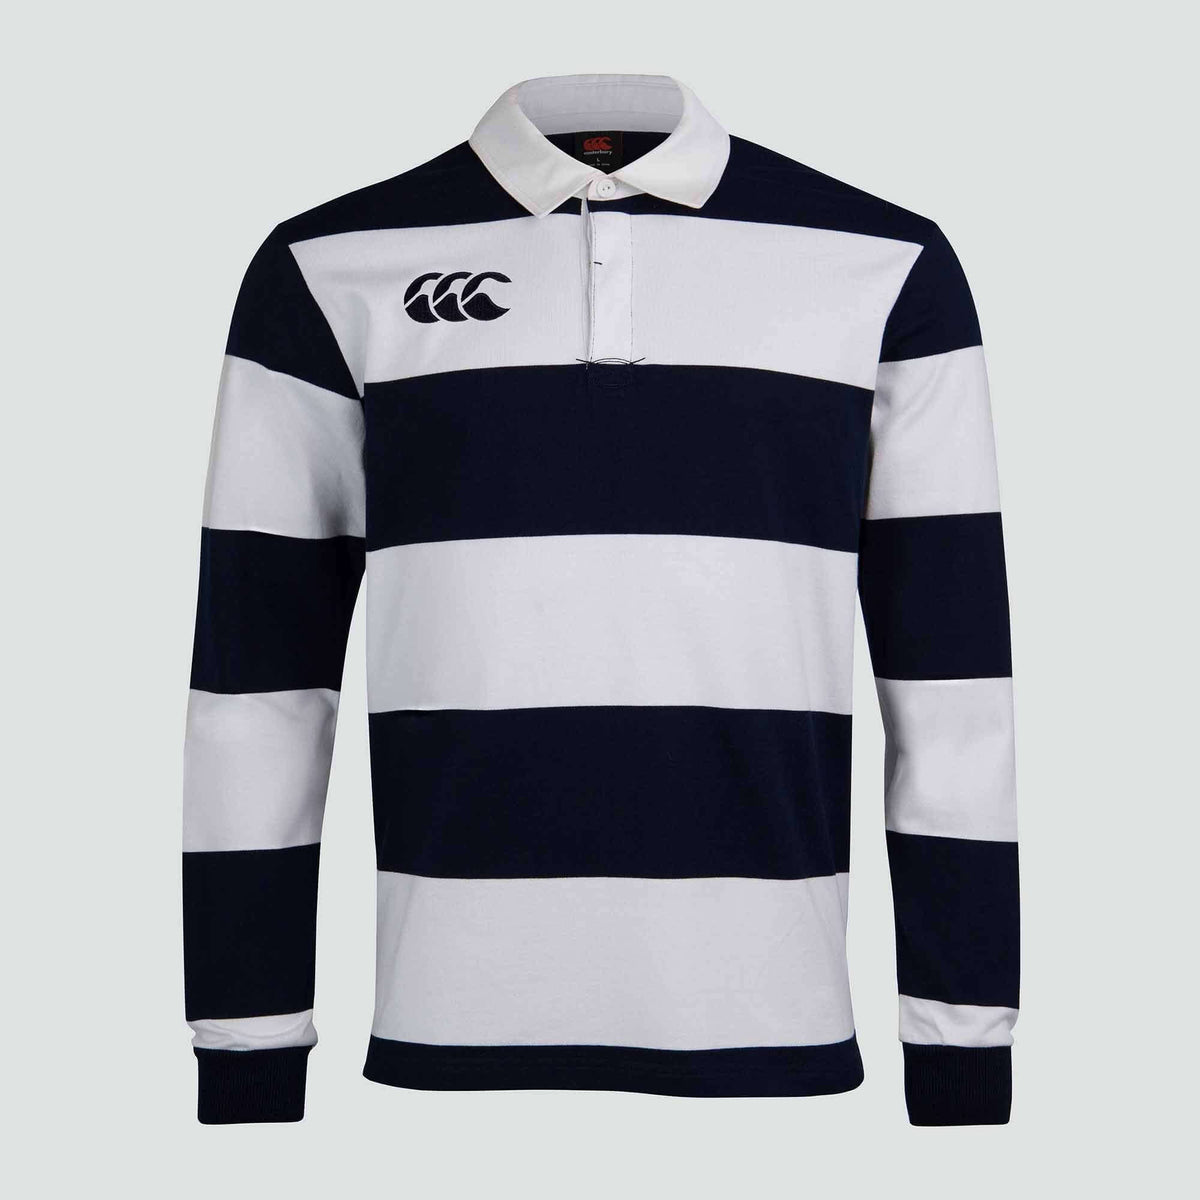 Canterbury Retro Rugby Jersey - Hoop Stripe - White |Rugby Jersey | Canterbury | Absolute Rugby